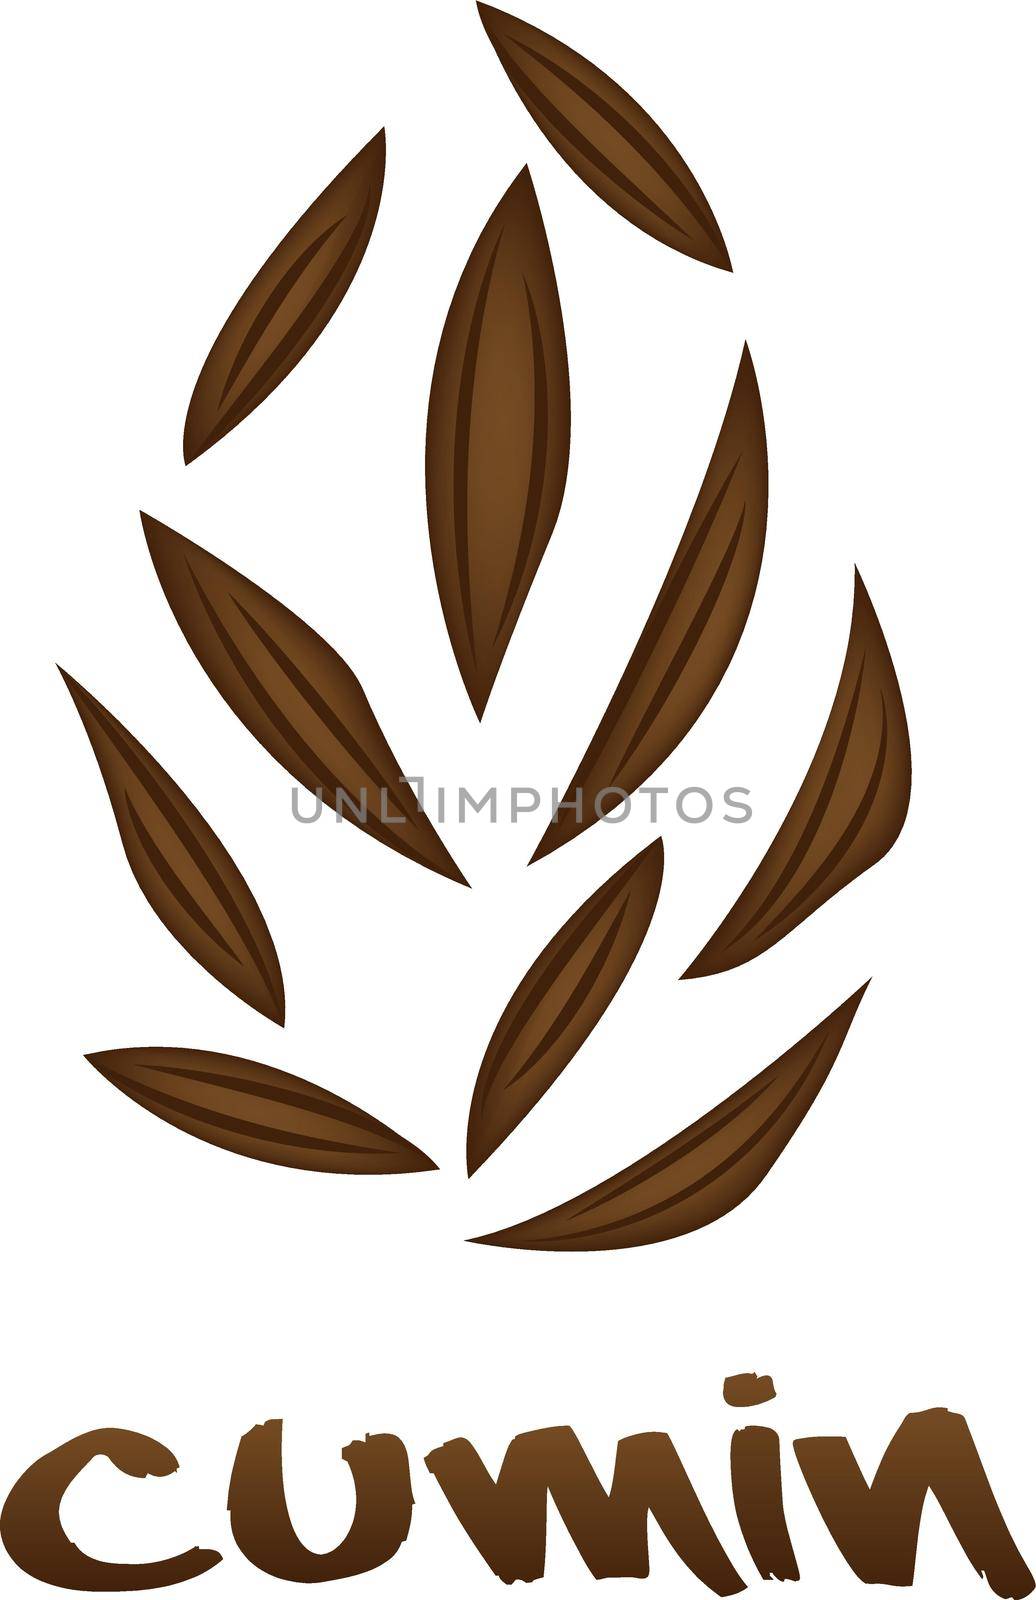 Cumin Zira seeds vector illustration on a white background